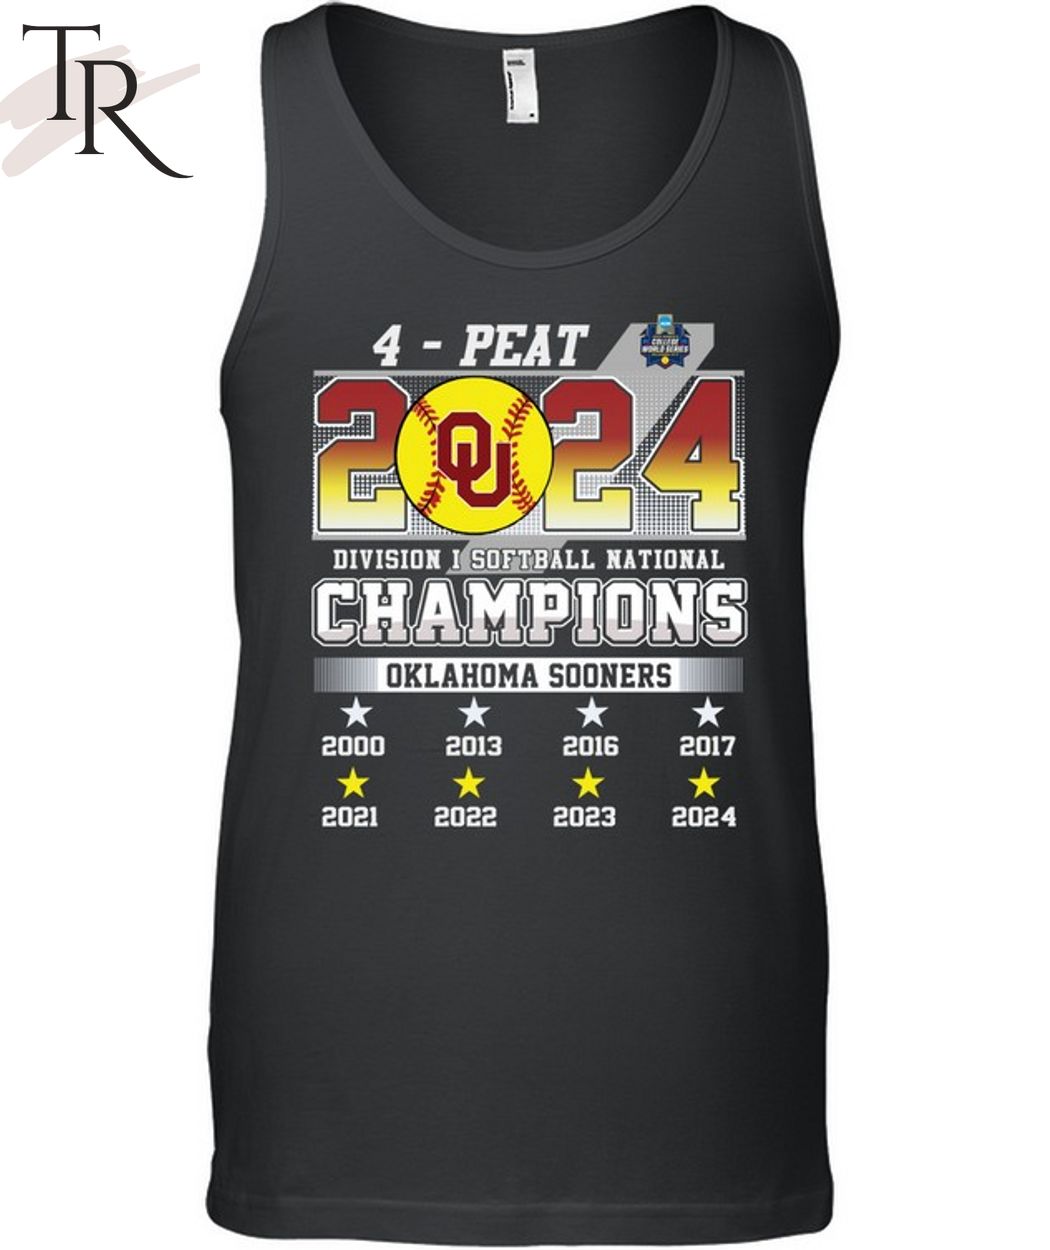 4 - Peat 2024 Division I Softball National Champions Oklahoma Sooners T-Shirt